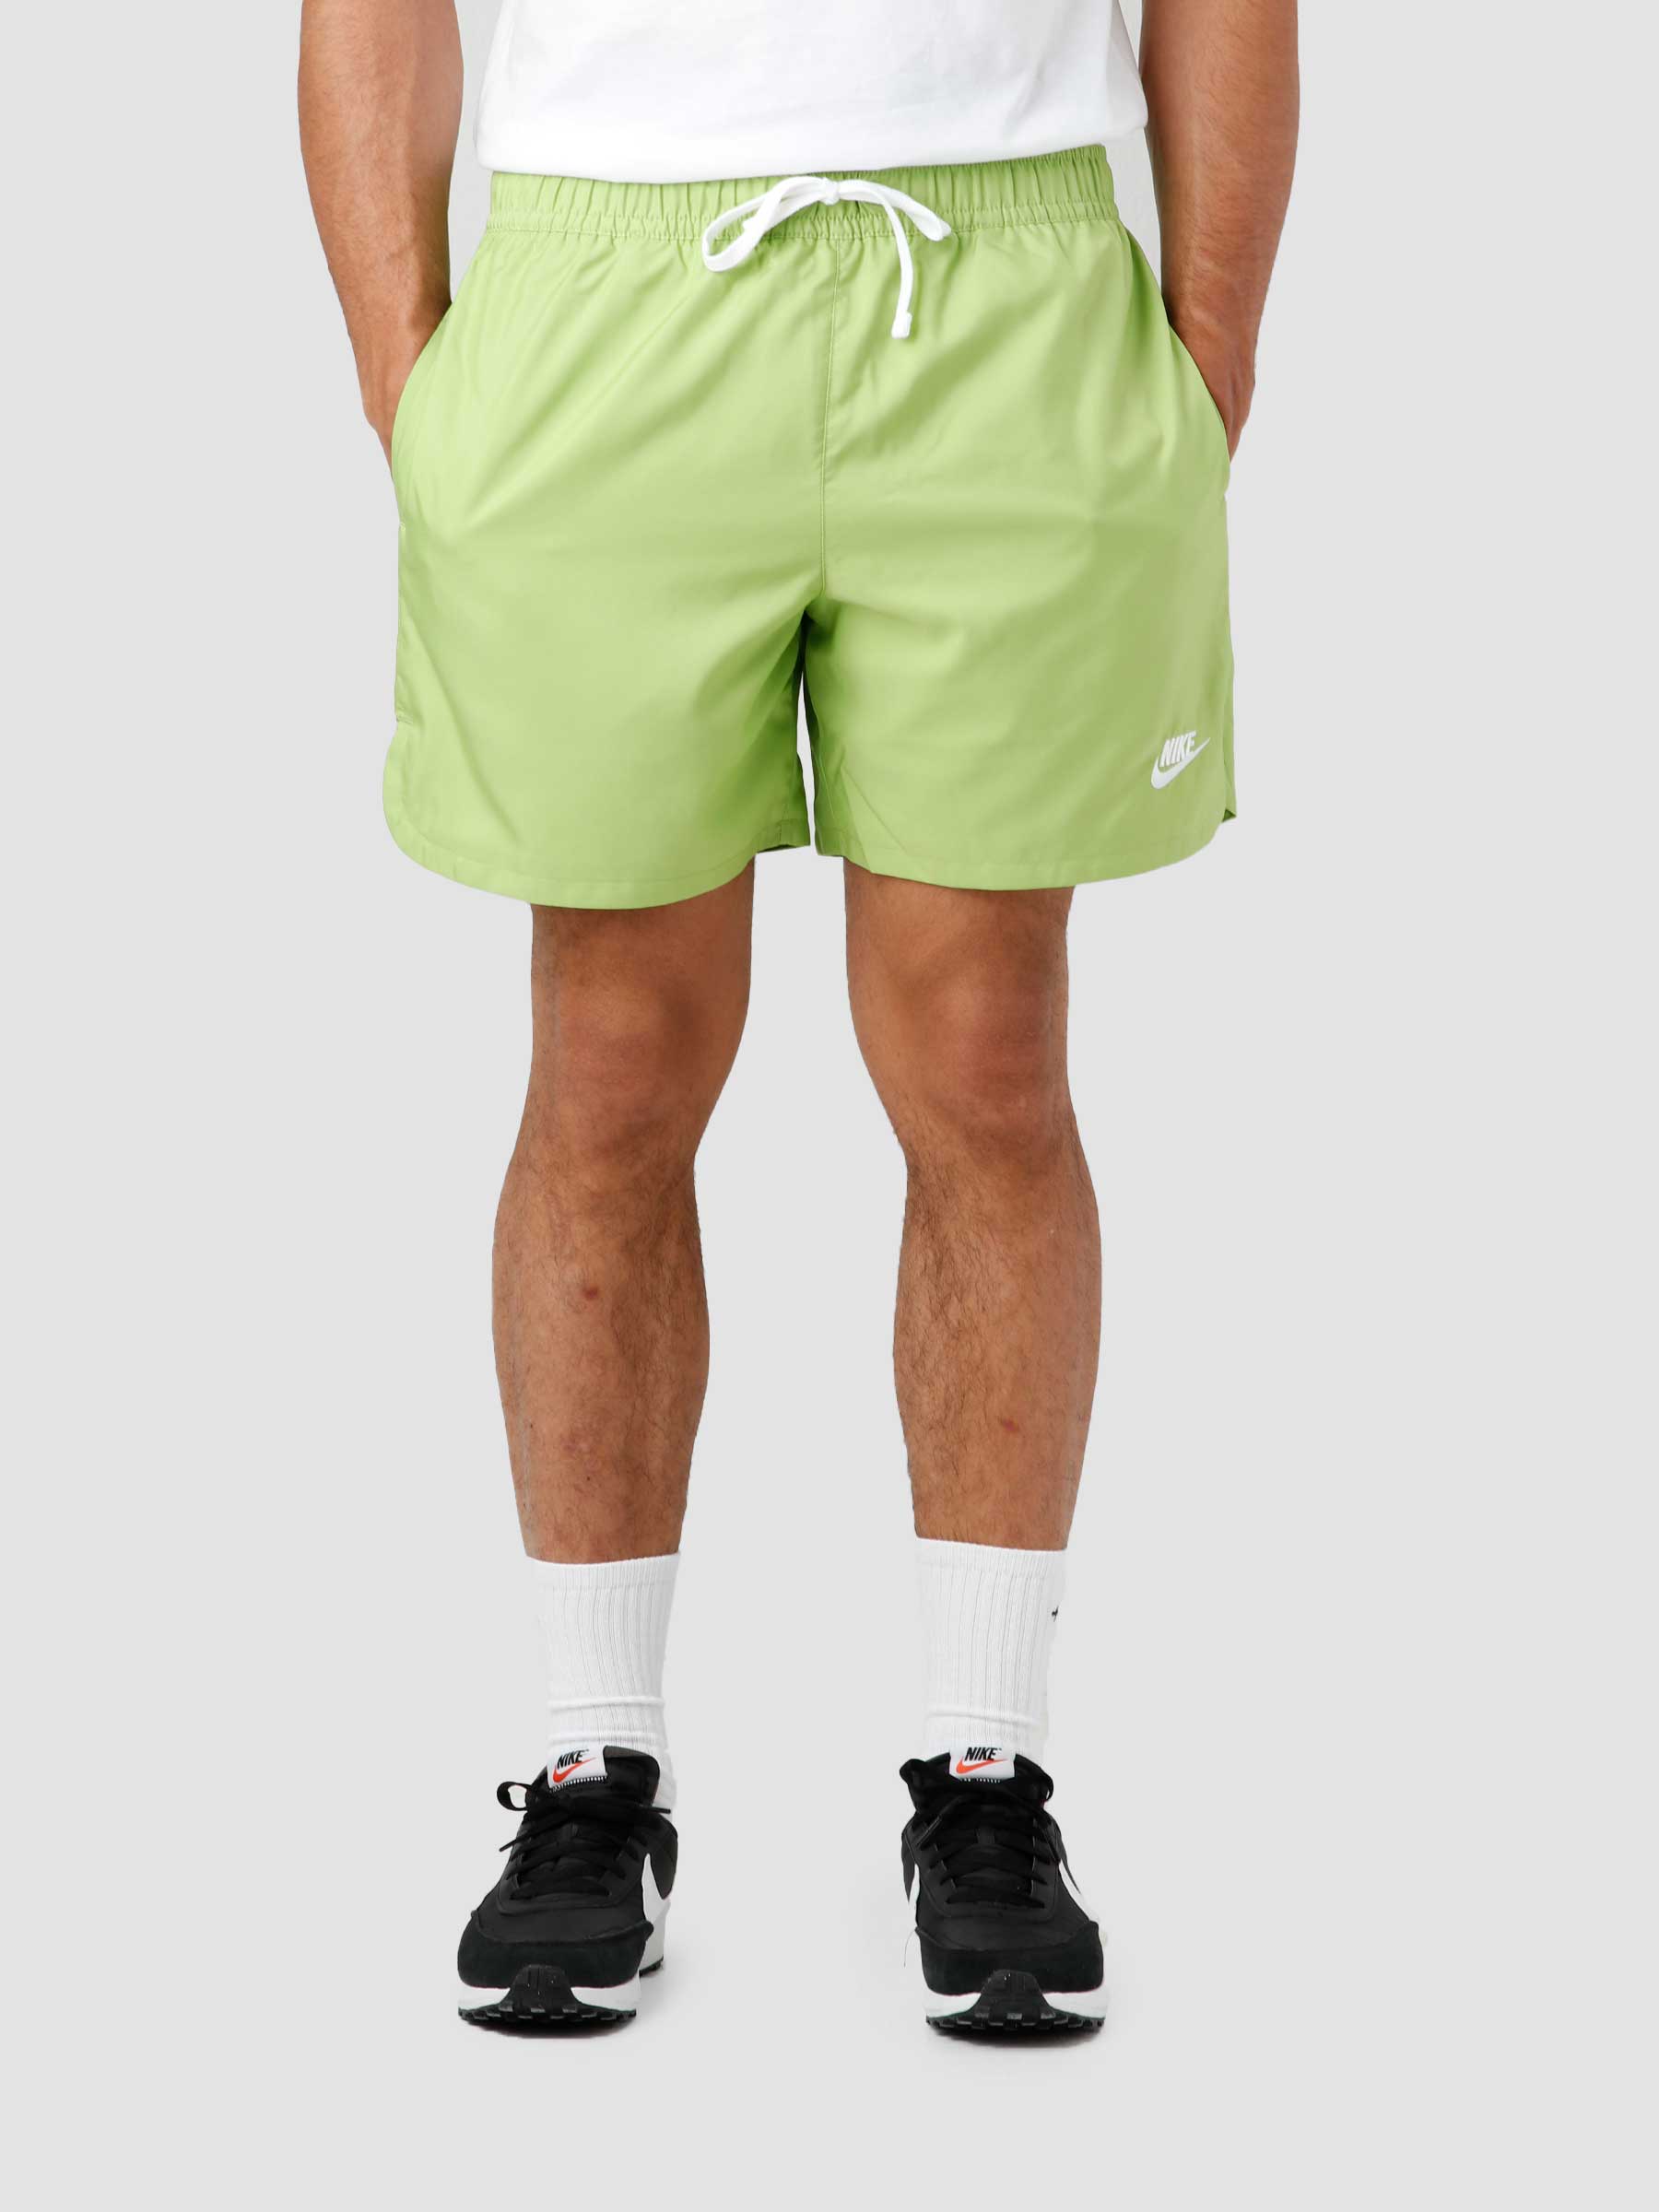 Спортивные шорты мужские Nike Spe Wvn Lnd Flow Short, DM6829-332, размер M